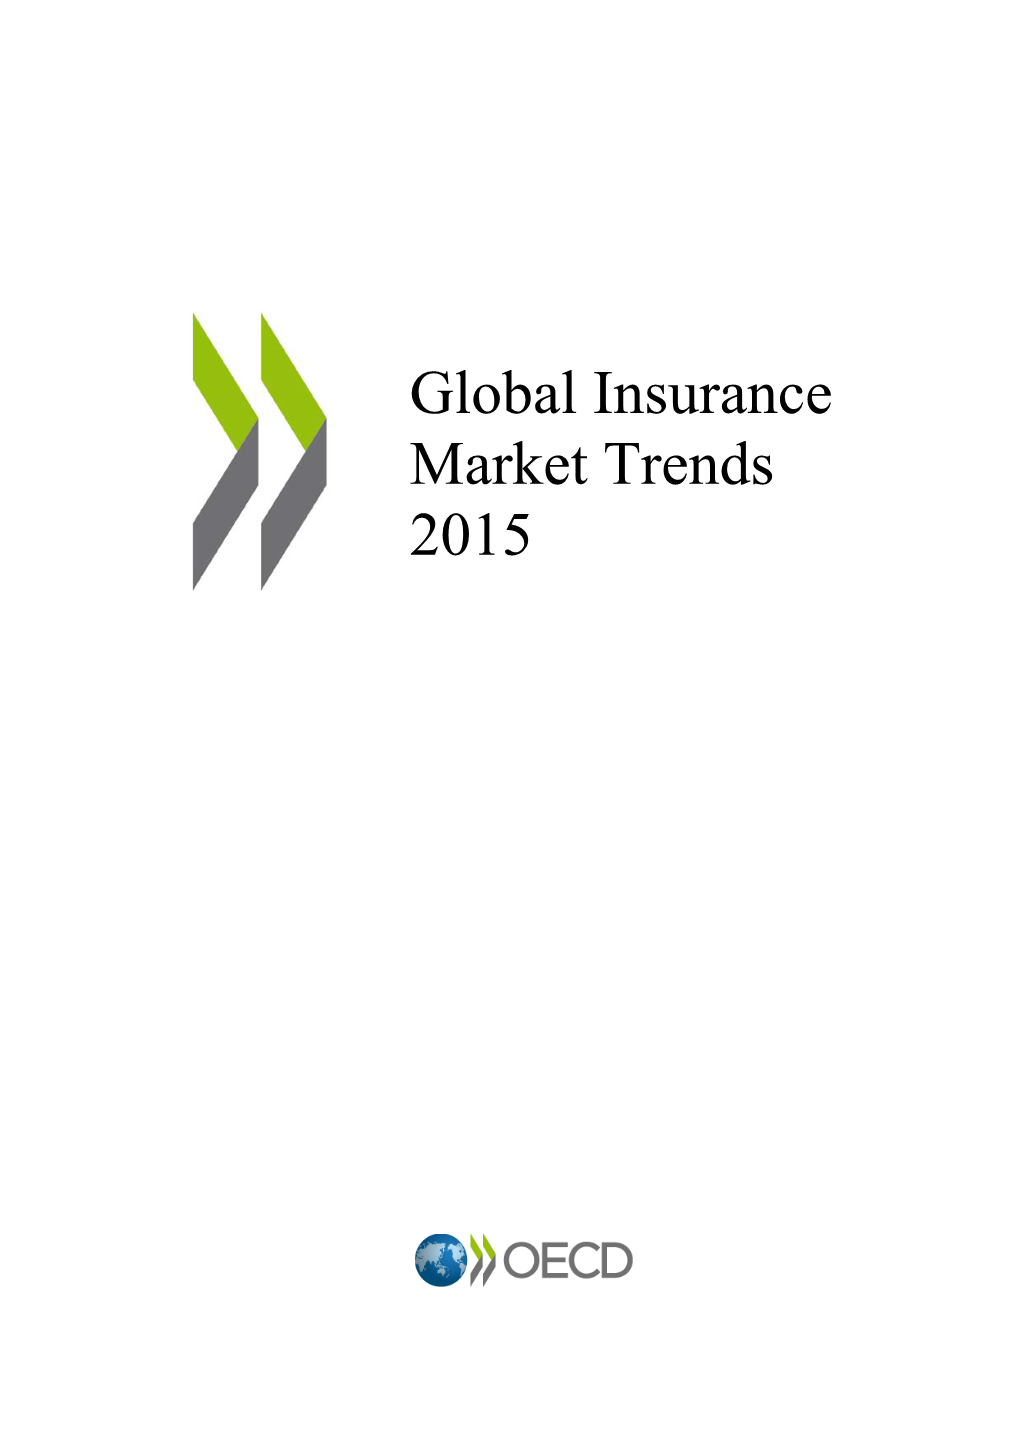 Global Insurance Market Trends 2015